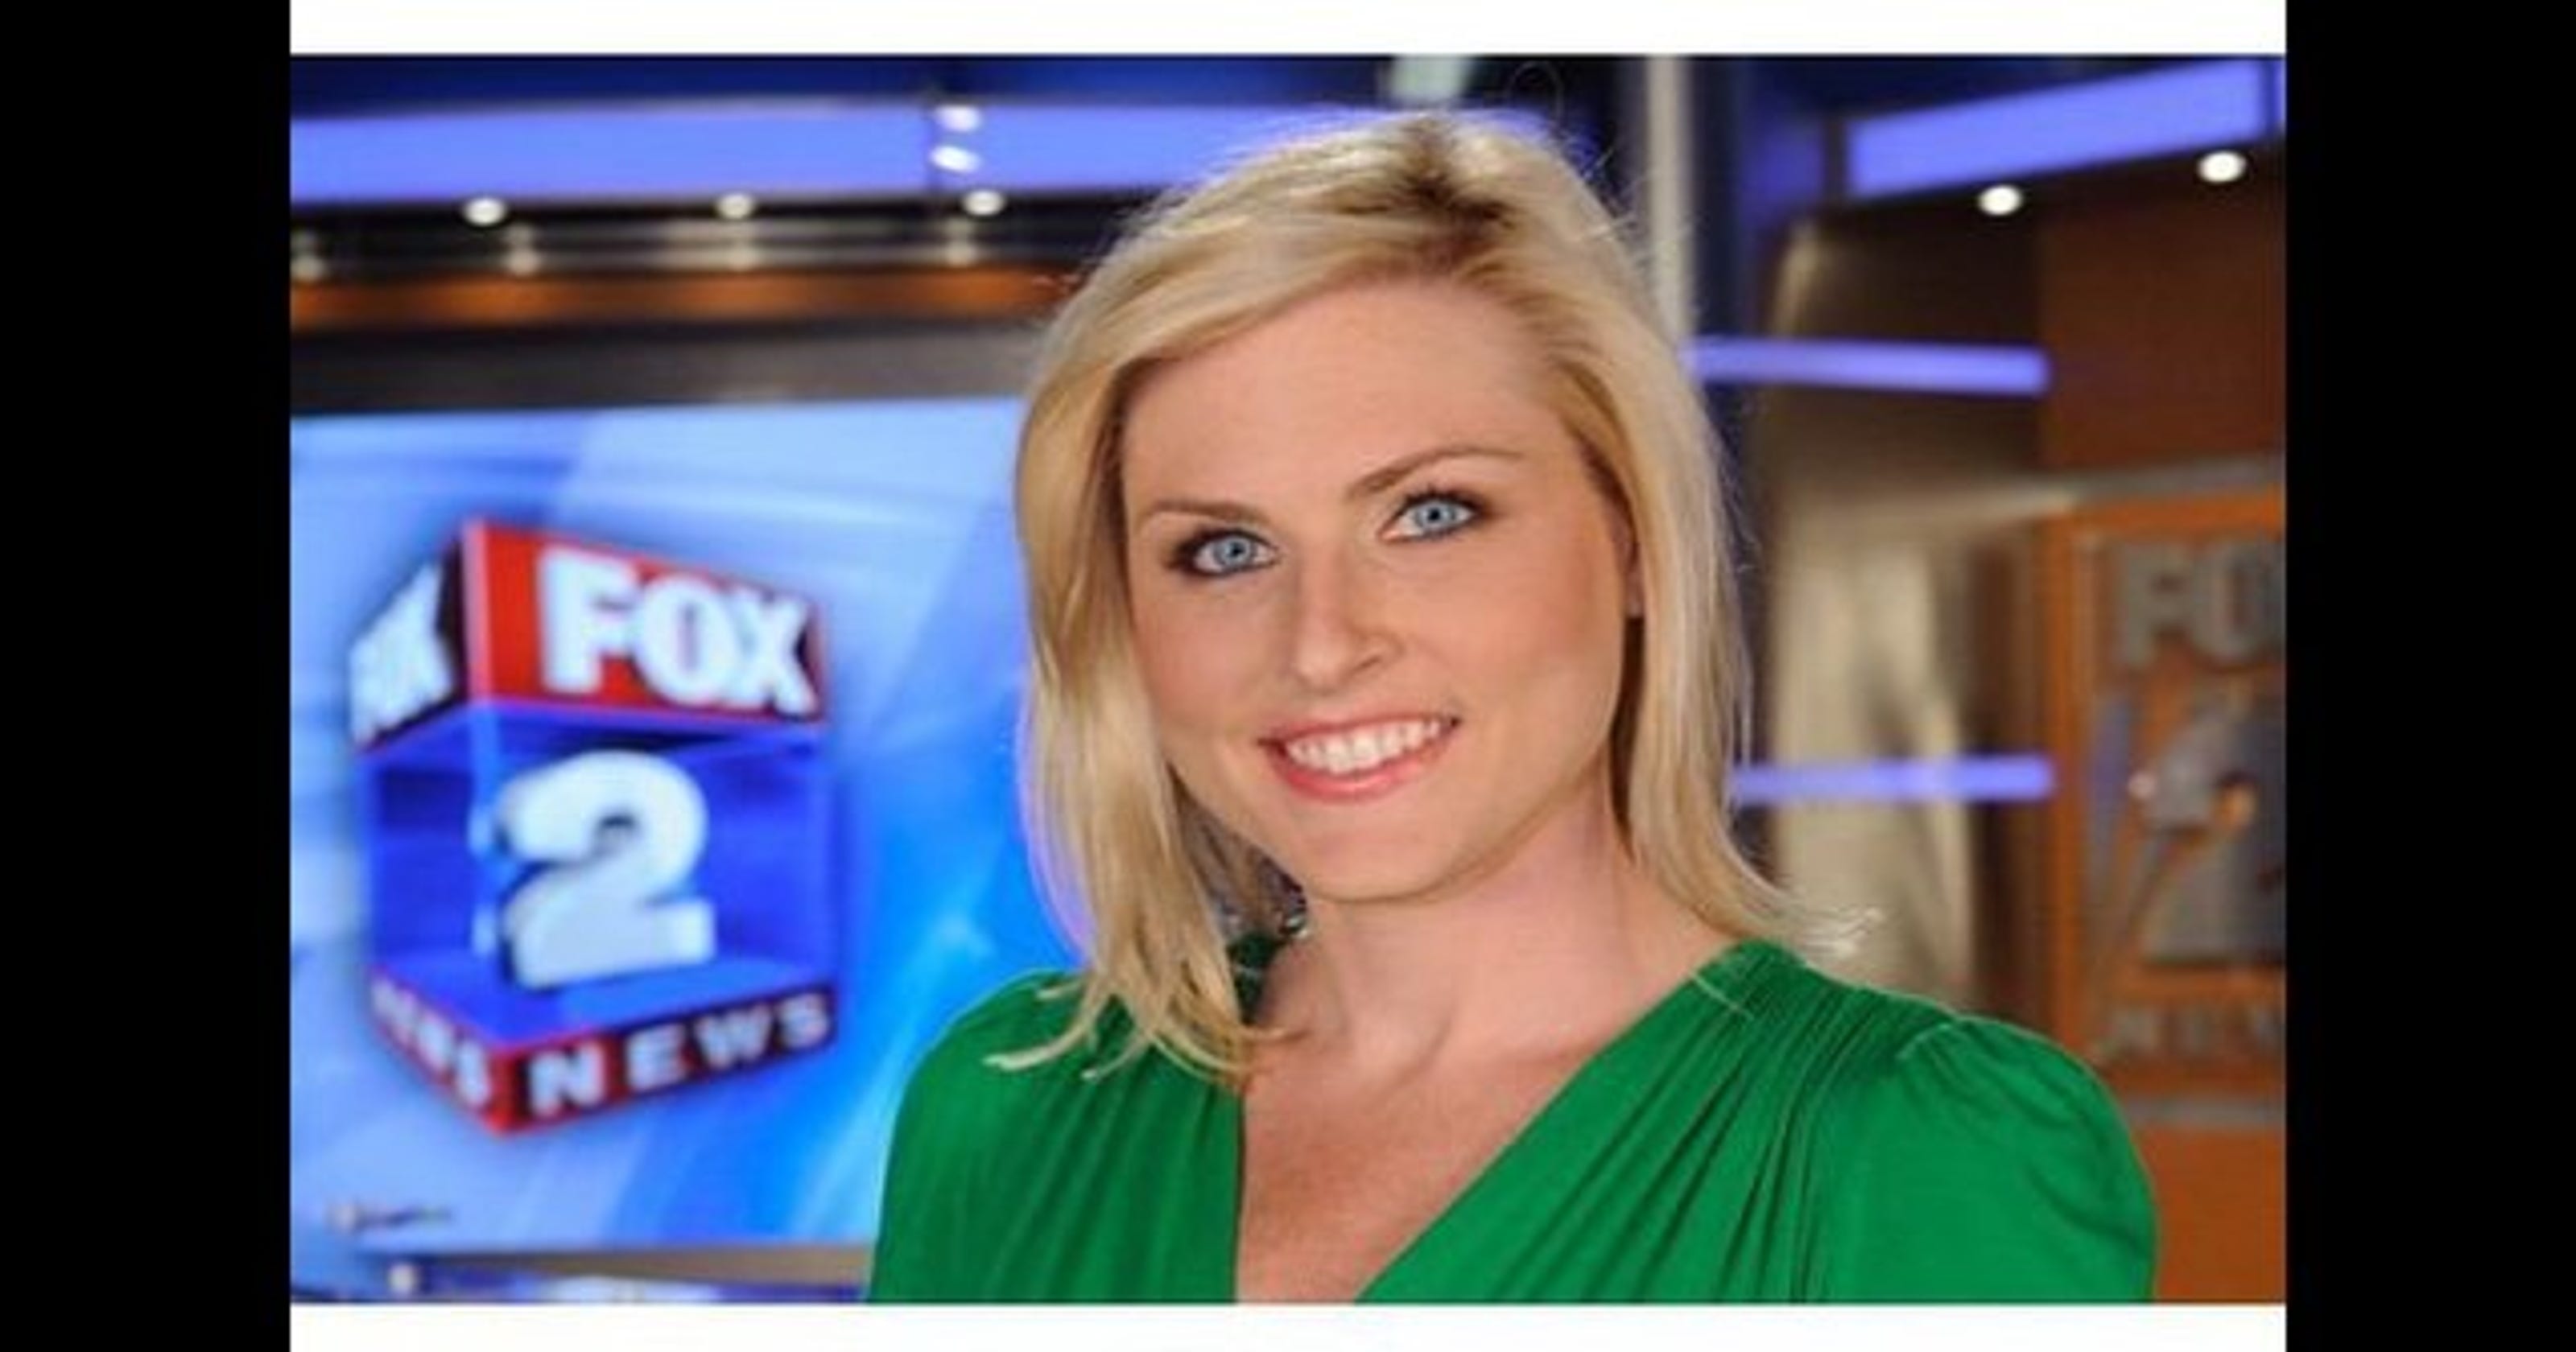 Fox 2 Detroit meteorologist Jessica Starr commits suicide